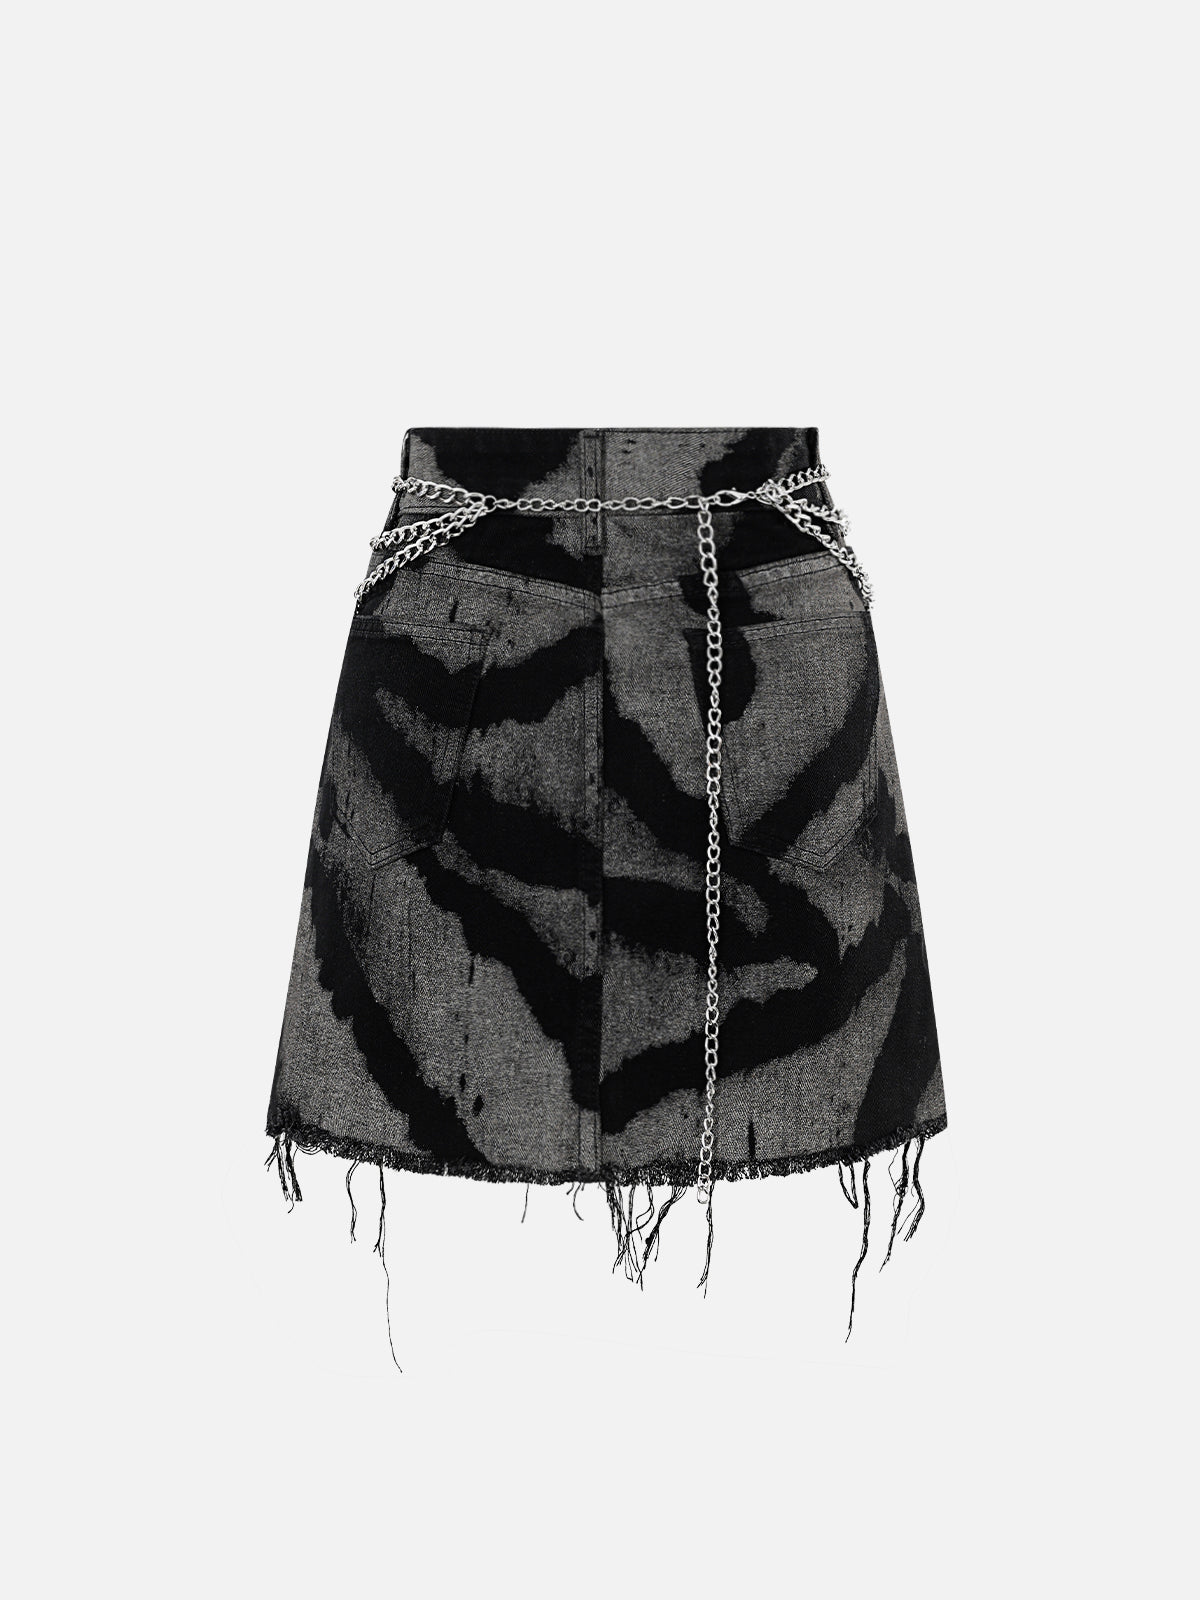 NEV Chain Tie-Dye Raw Edge Skirt